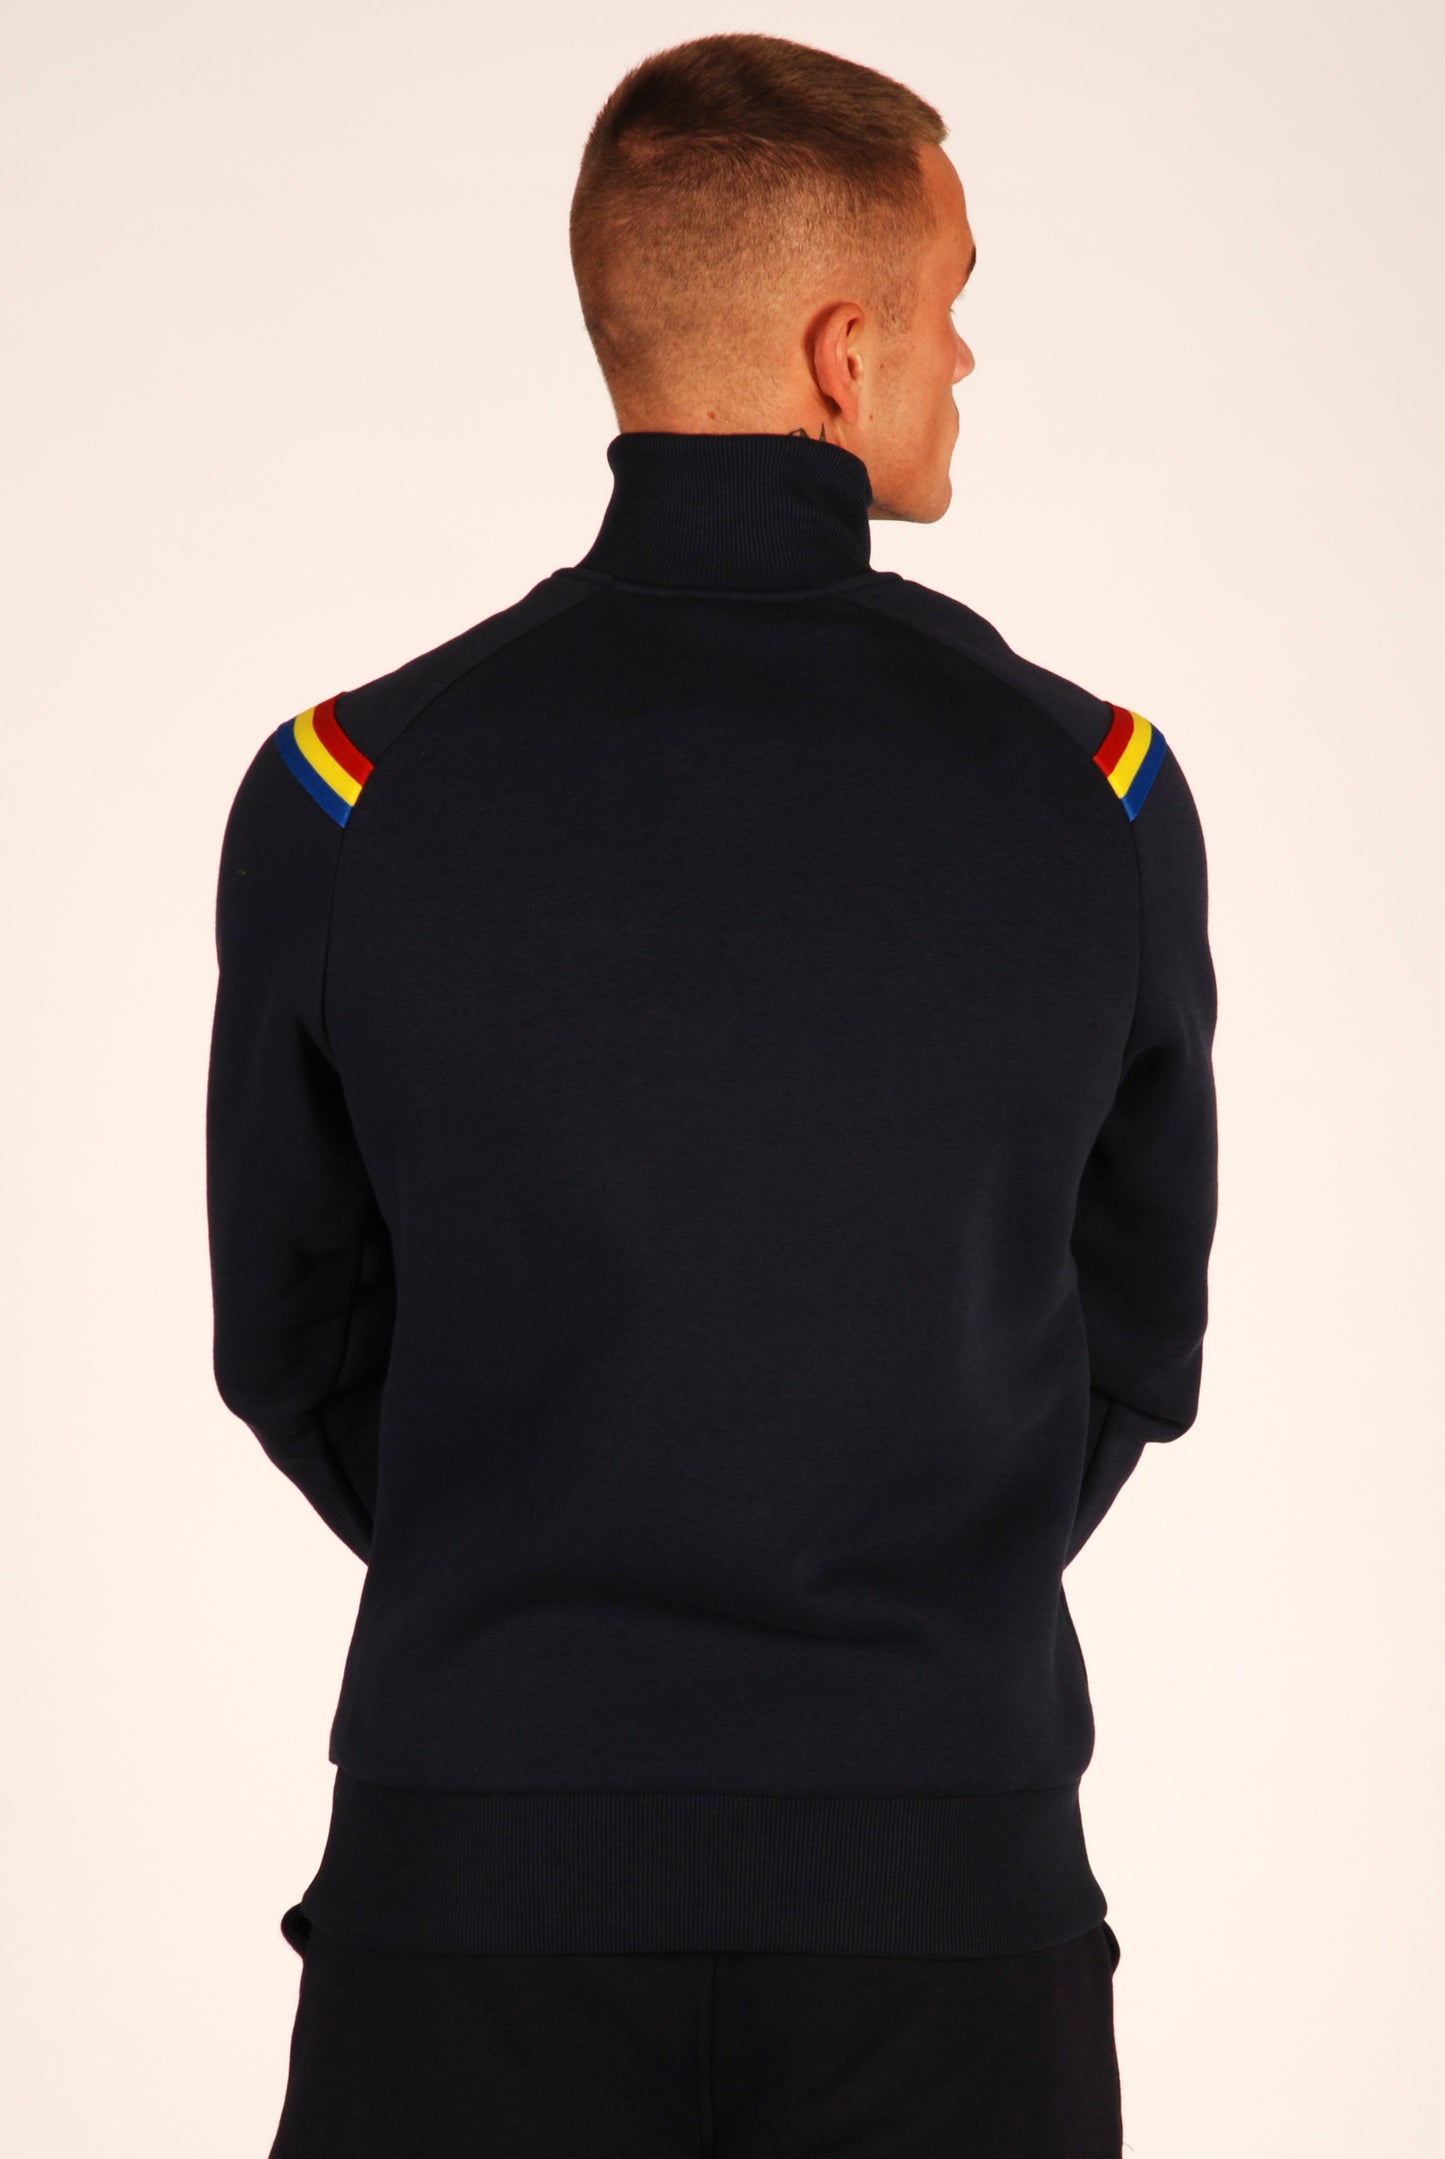 KRONK One Colour Gloves Quarter Zip Track Top Sweatshirt Navy